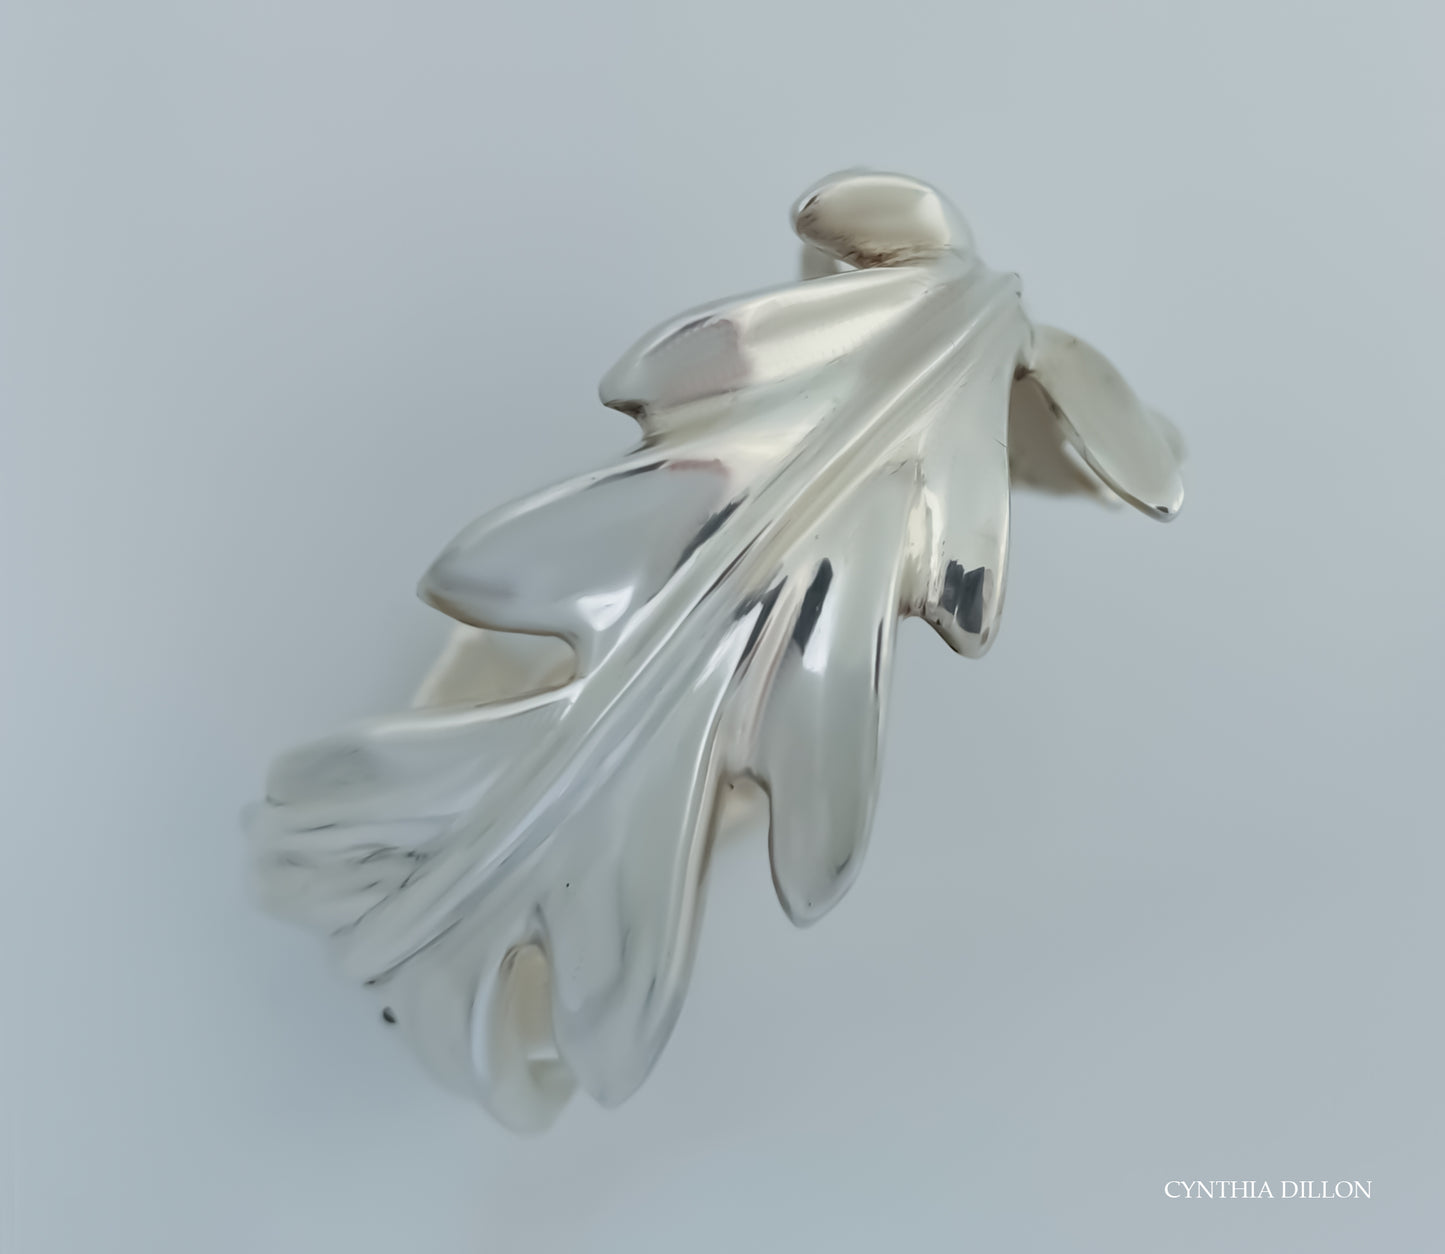 Bracelet - "Another Leaf" in Sterling Silver